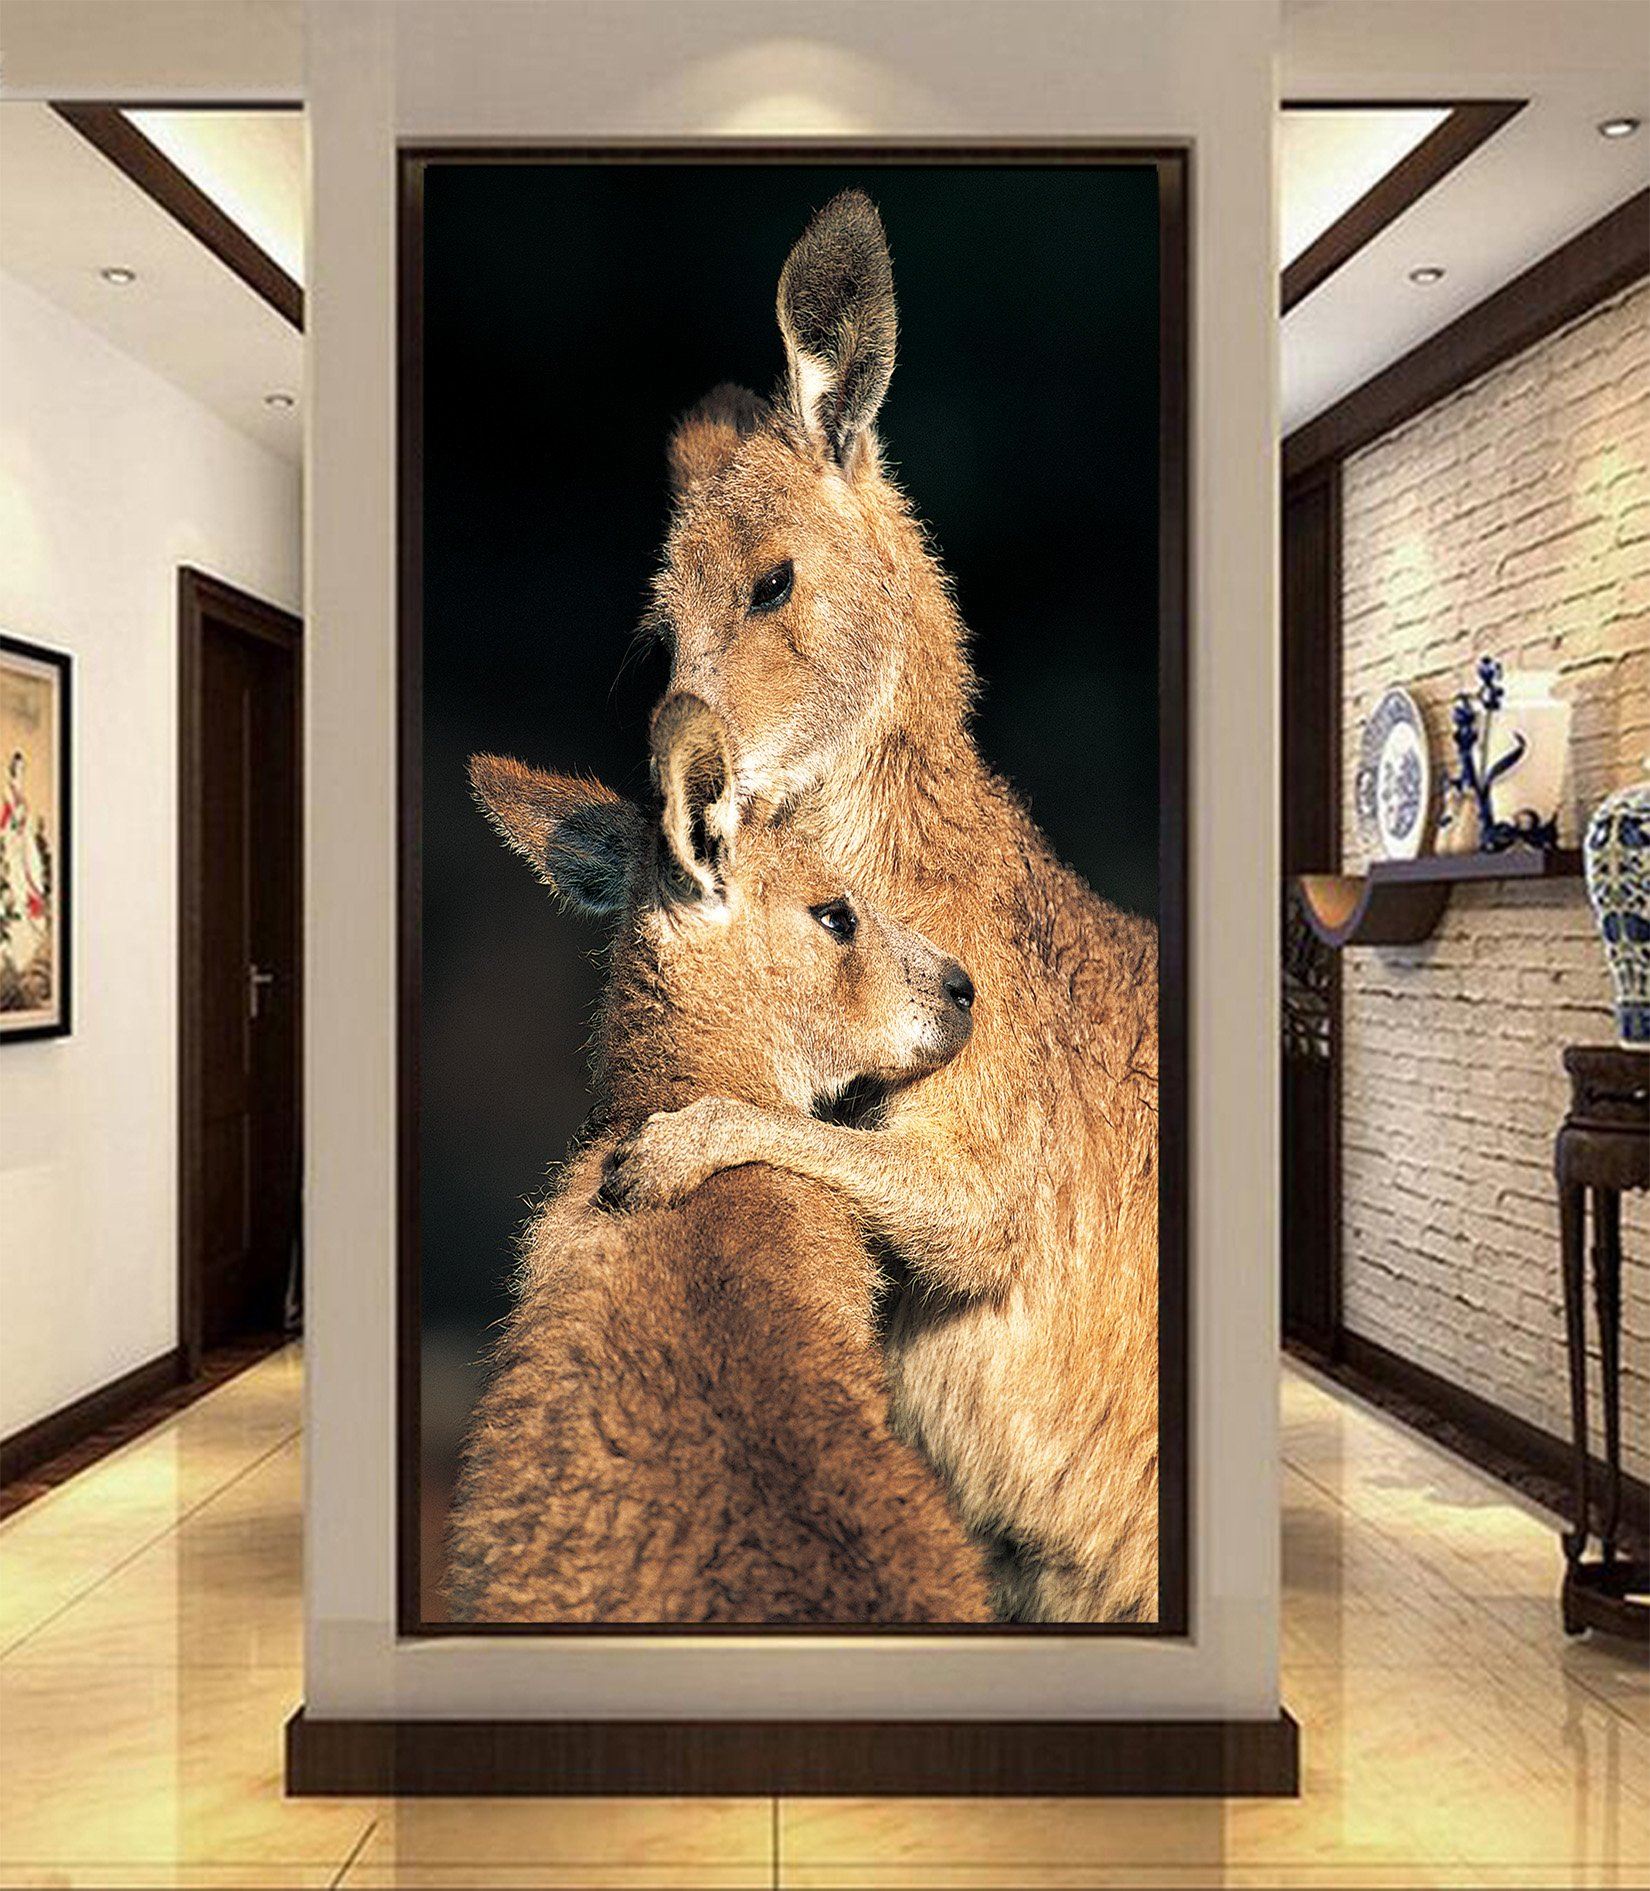 3D Embrace Kangaroo 001 Wallpaper AJ Wallpaper 